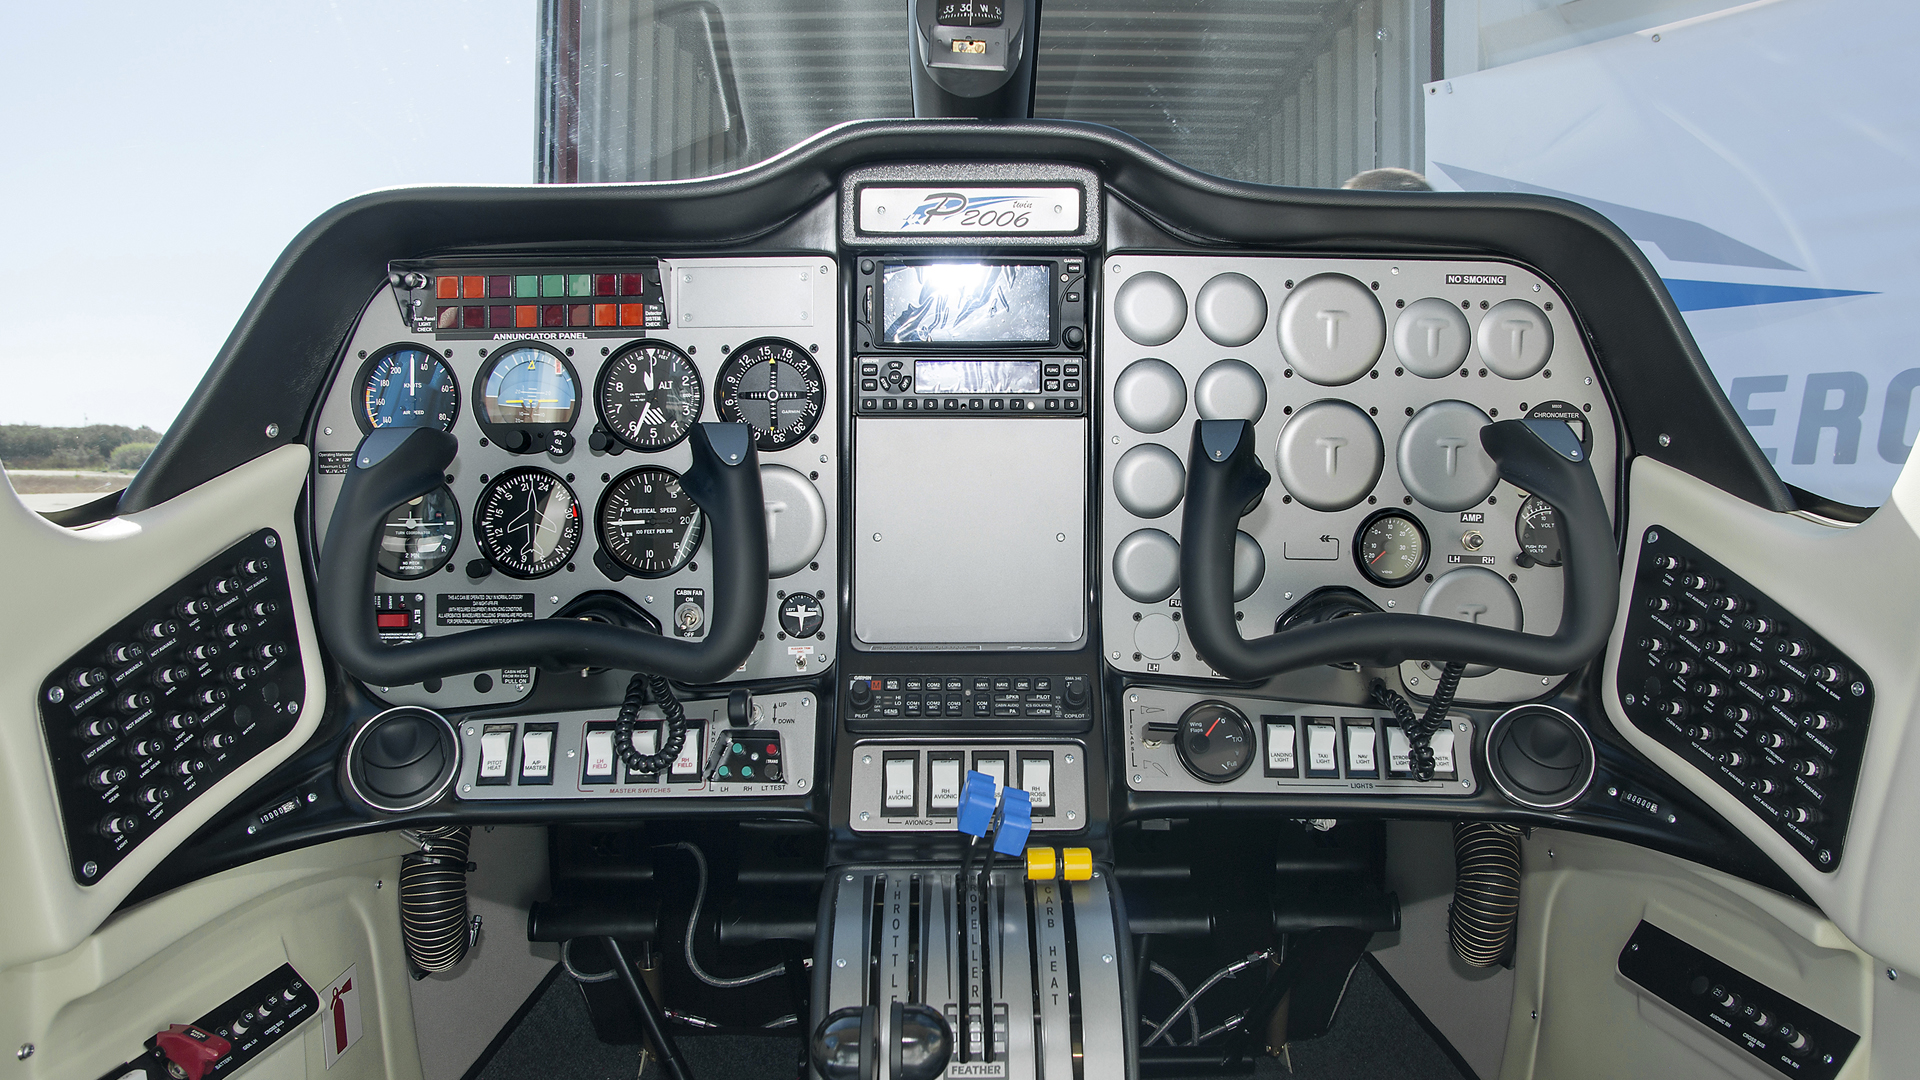 The Tecnam P2006T cockpit for the X-57.